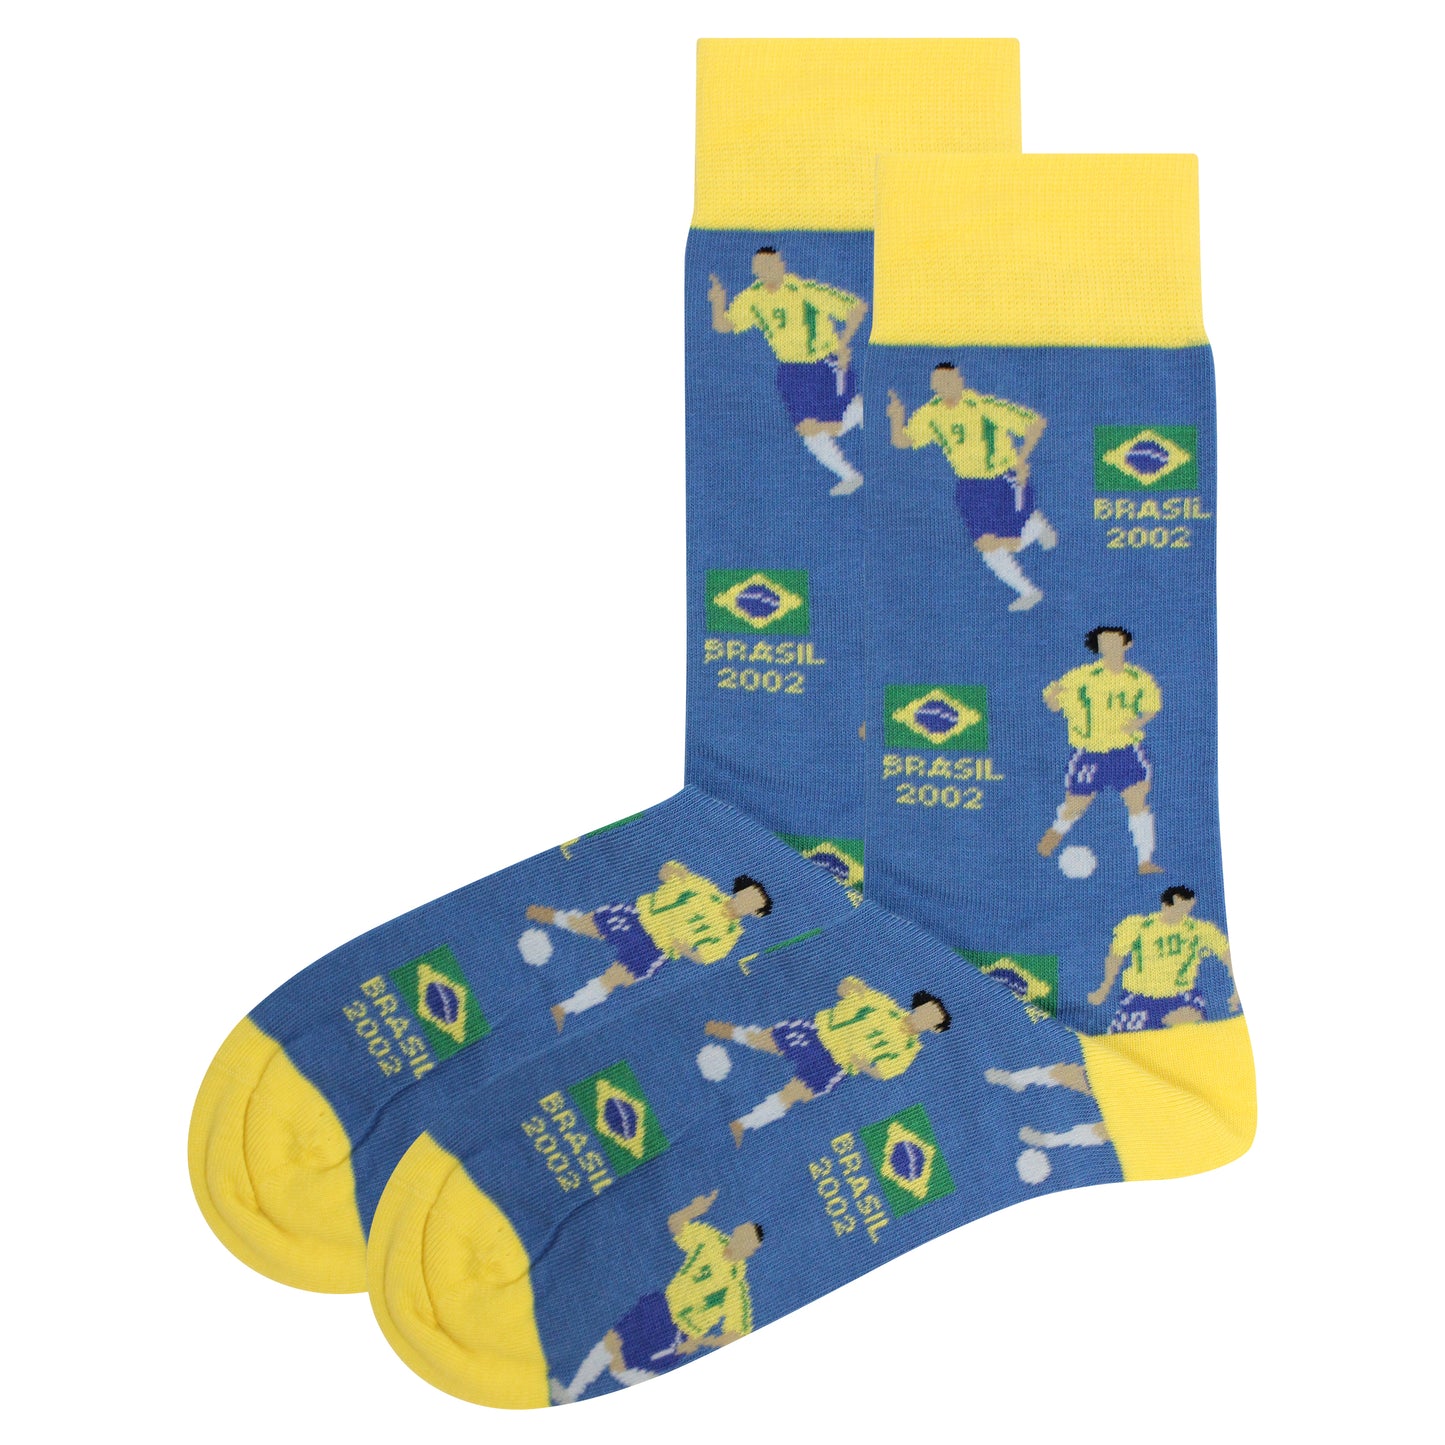 Brazil 2002 World Cup | Retro Shirt Socks | Size UK 7 - 11